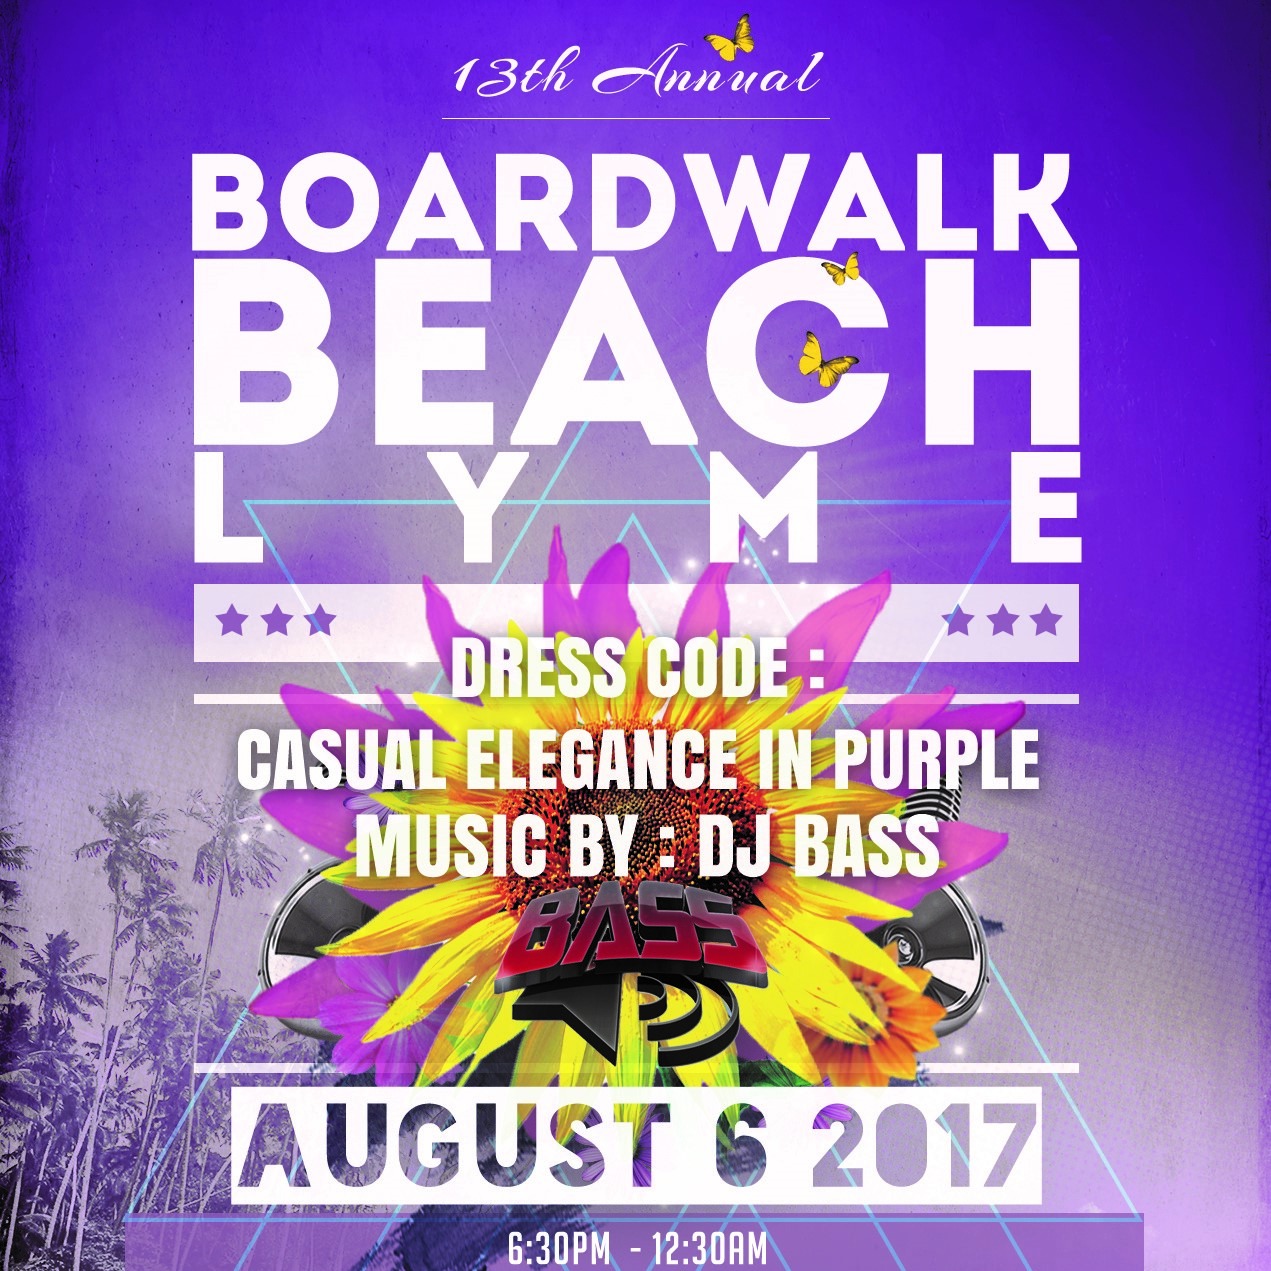 Boardwalk Beach Lyme 2017 